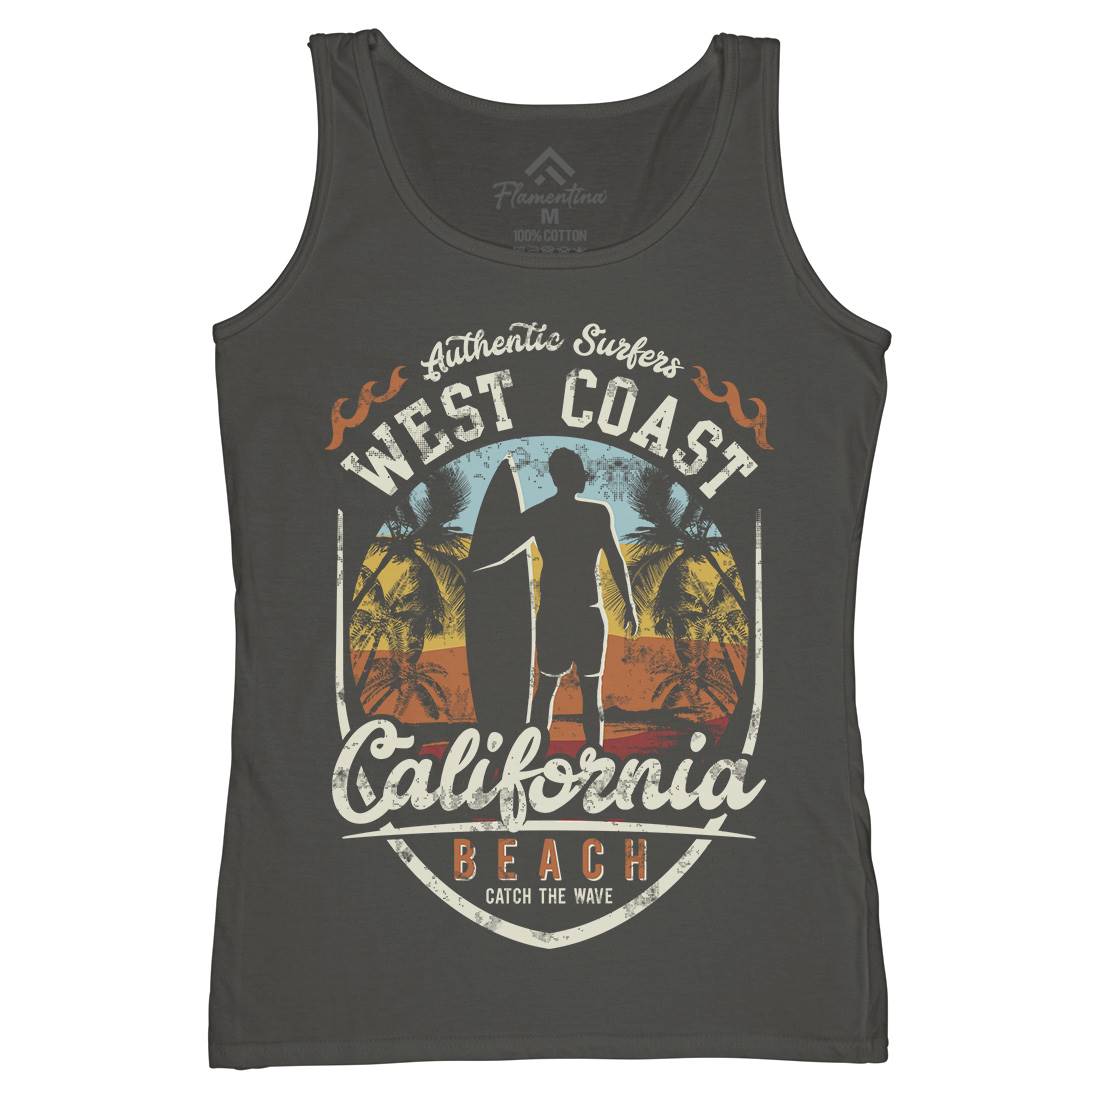 West Coast California Beach Womens Organic Tank Top Vest Holiday D095